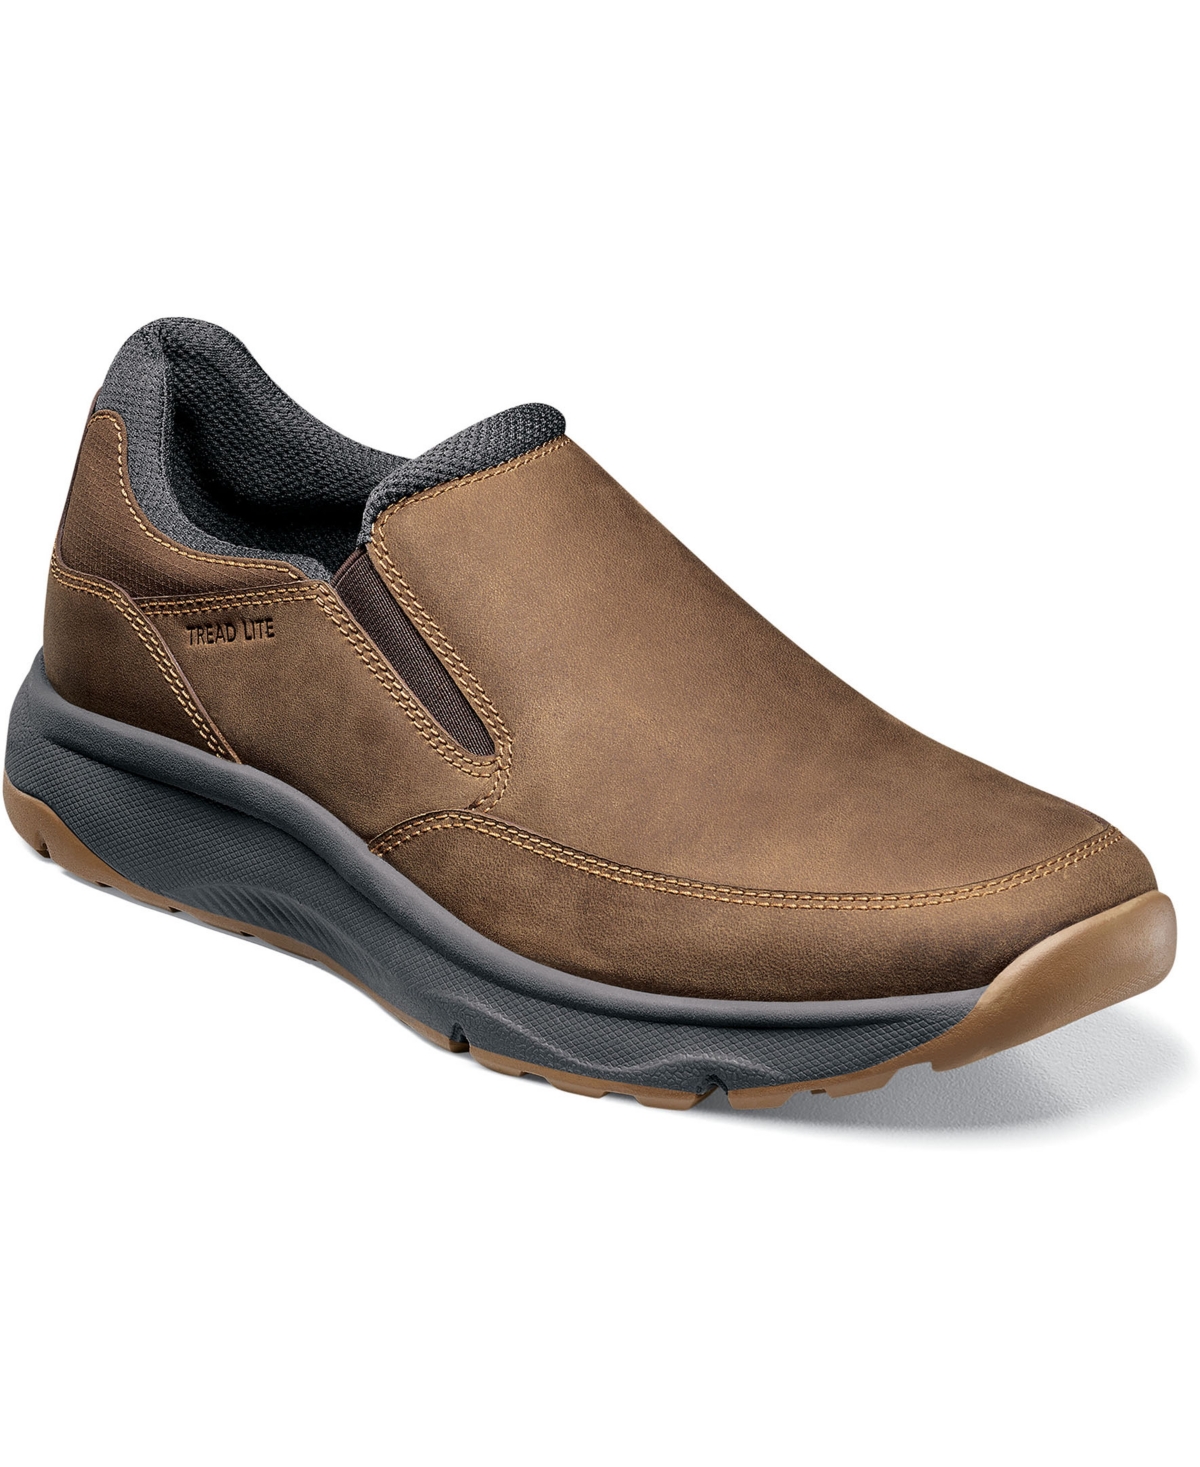 Men's Tread Lite Moc Toe Slip-On Shoes - Brown